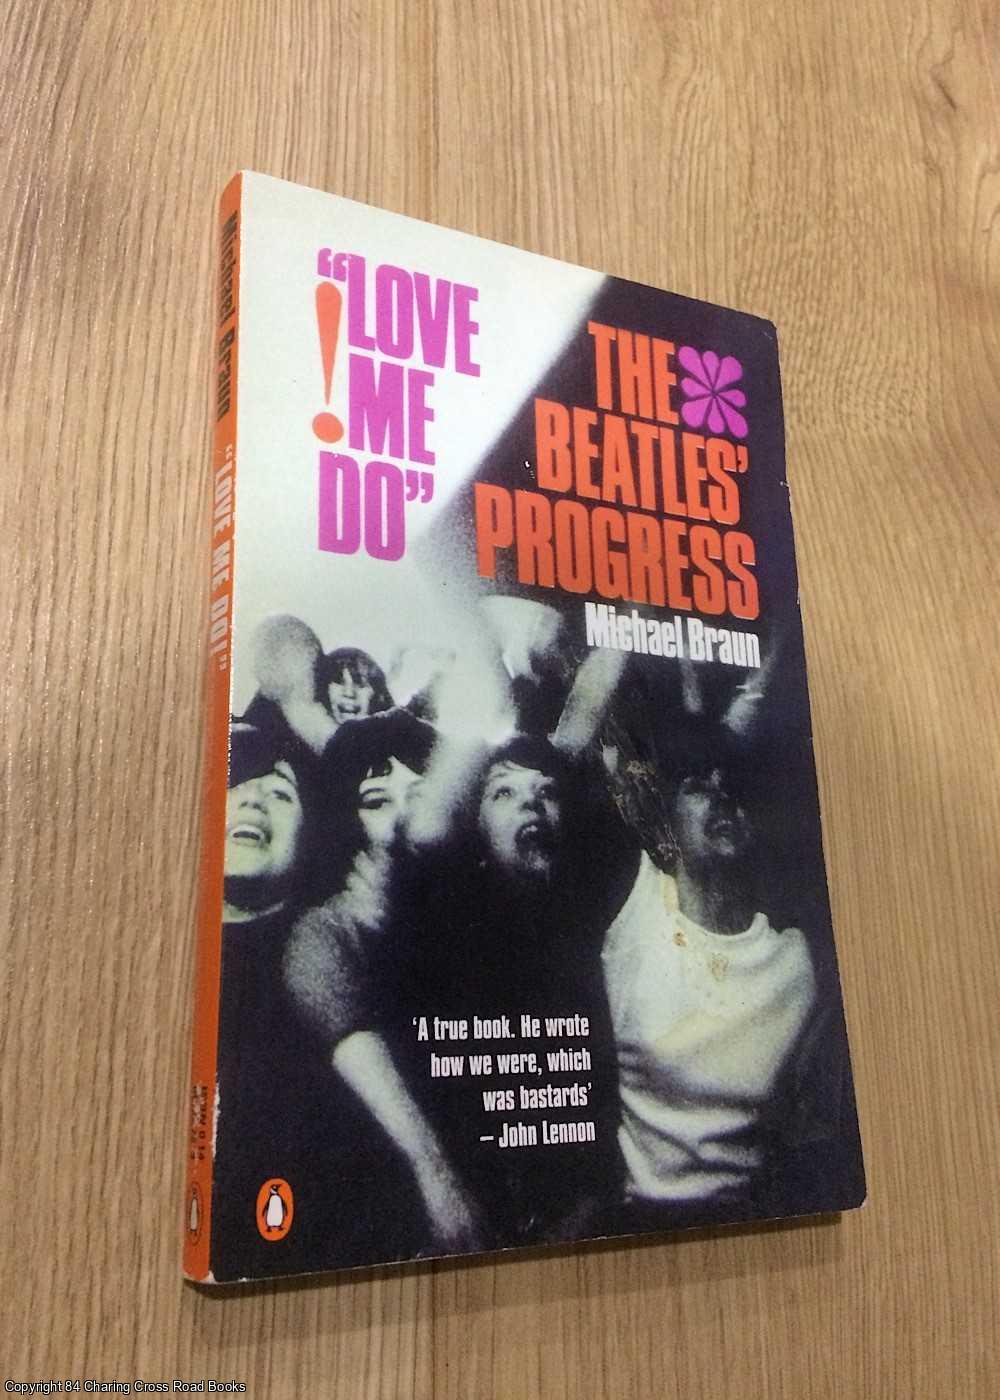 Braun, Michael - Love me do: The Beatles' progress